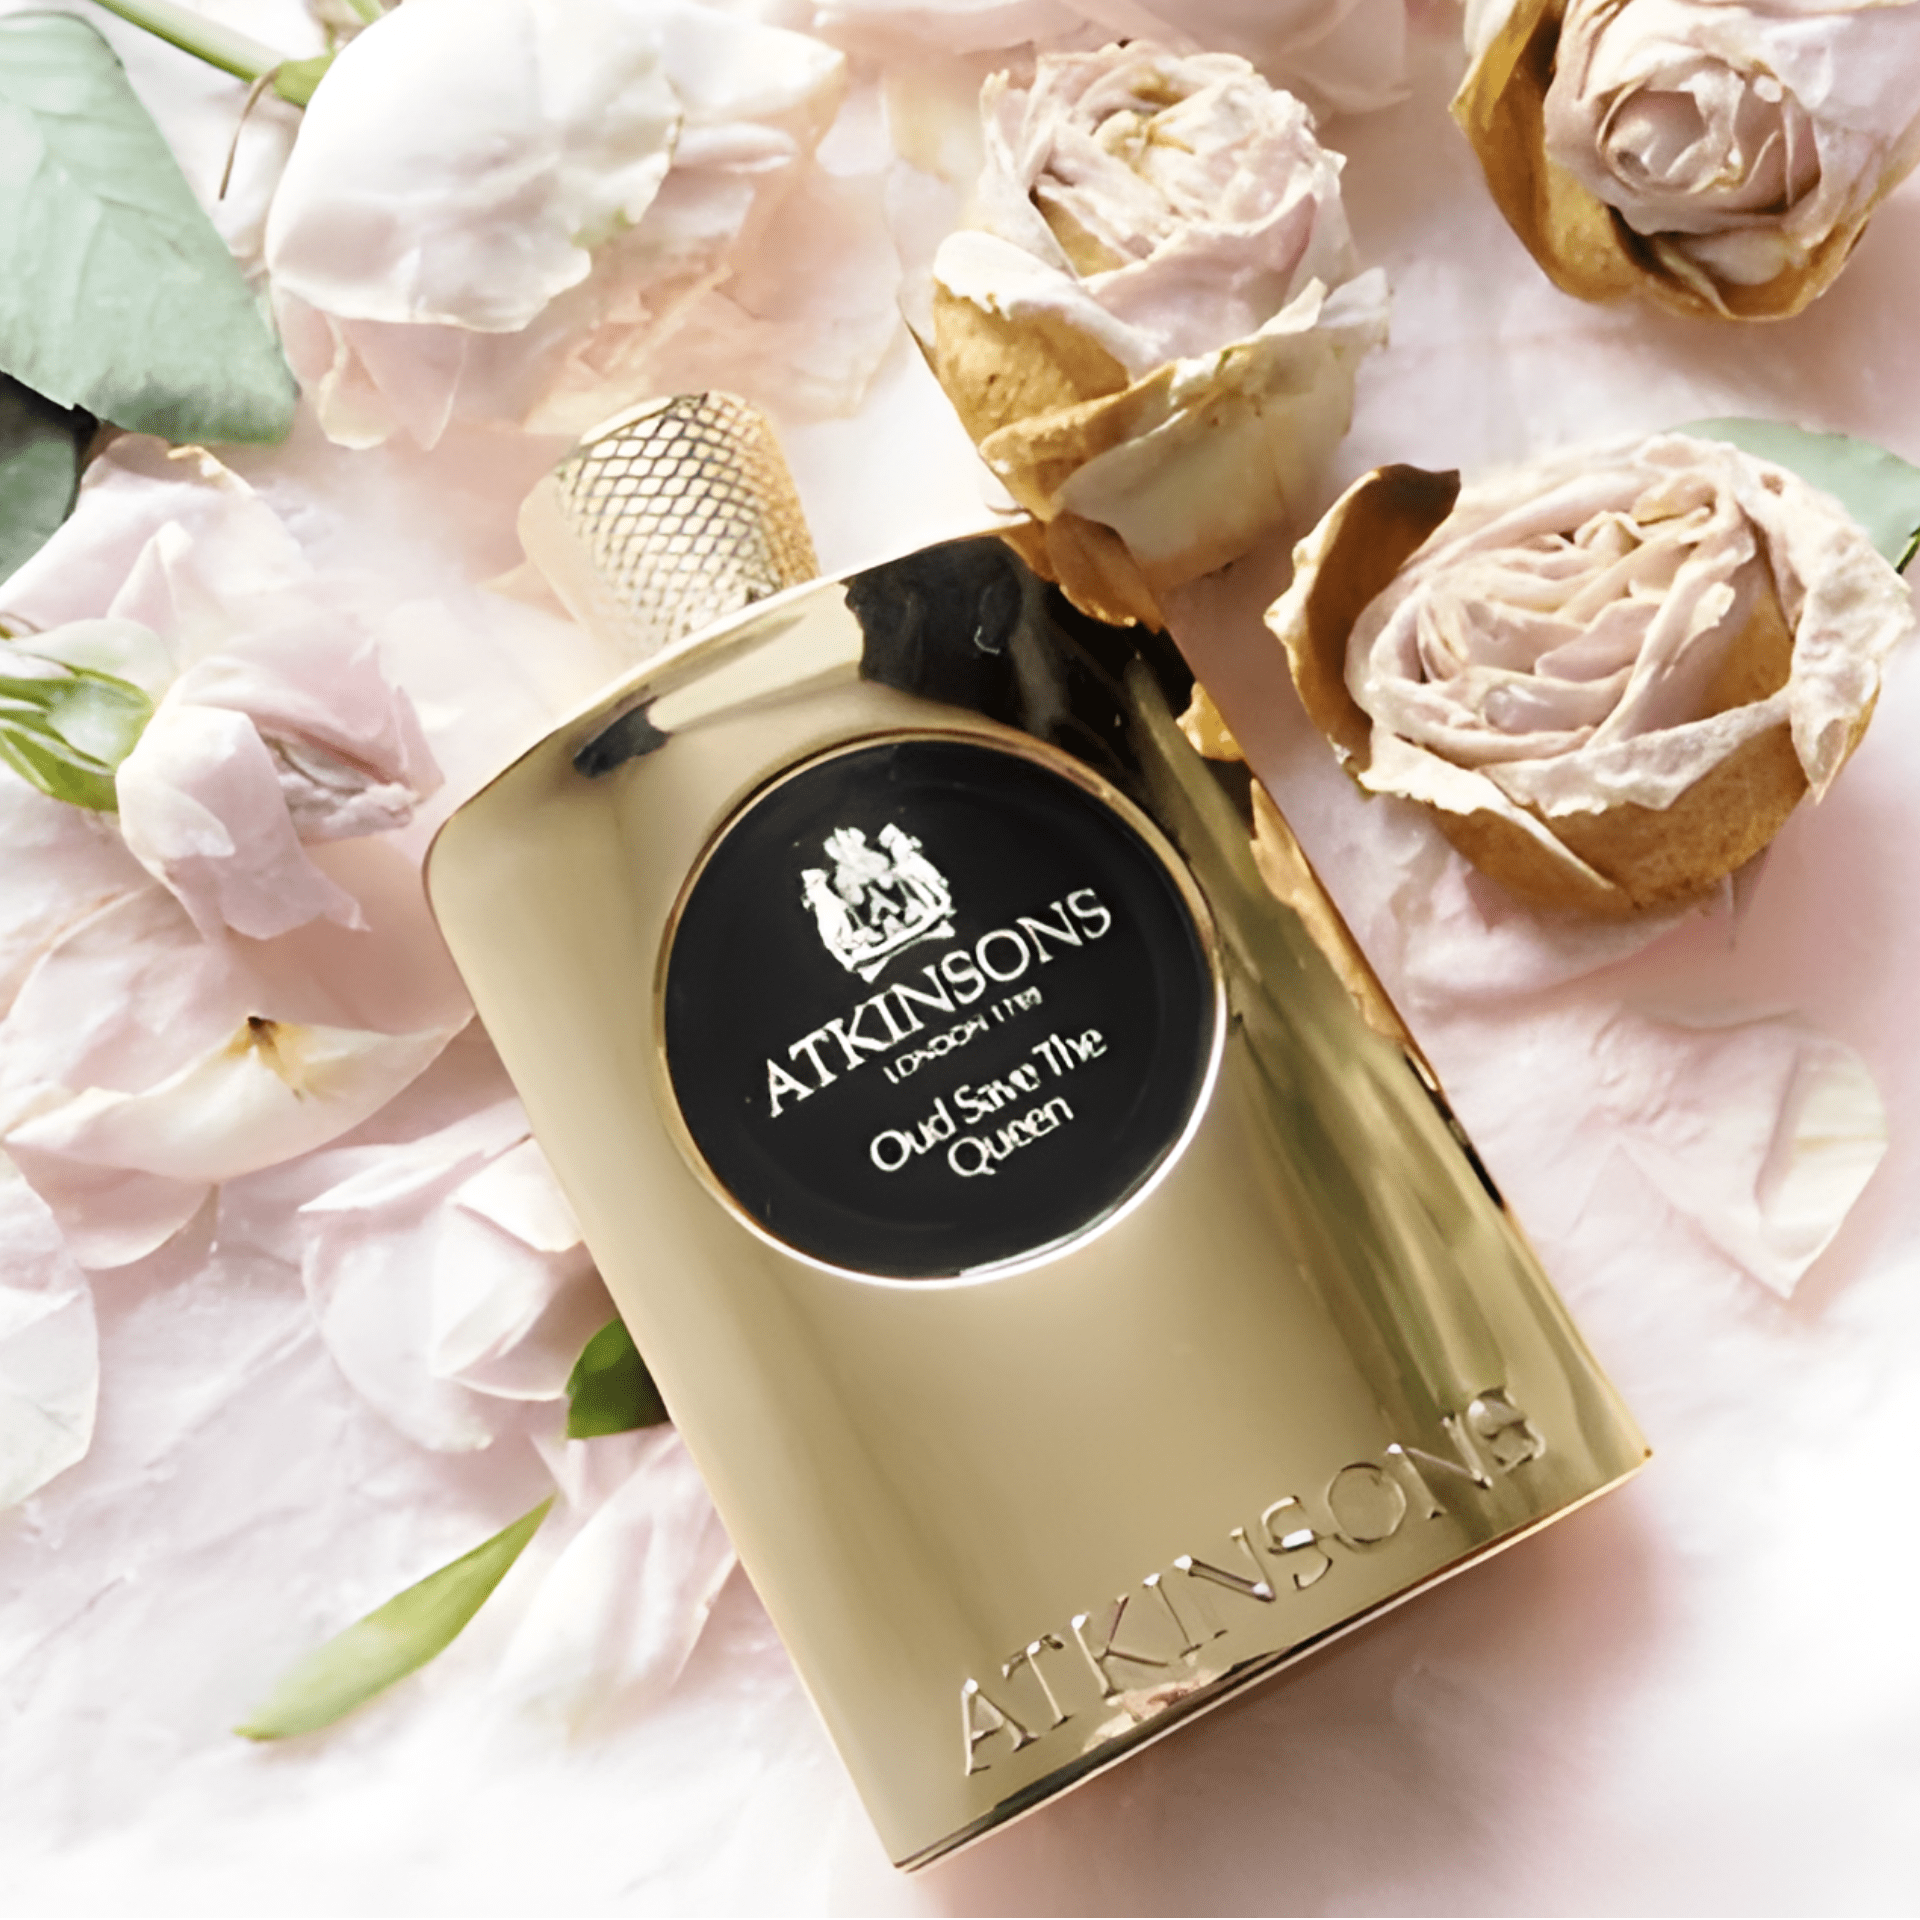 Atkinsons Her Majesty The Oud EDP | My Perfume Shop Australia